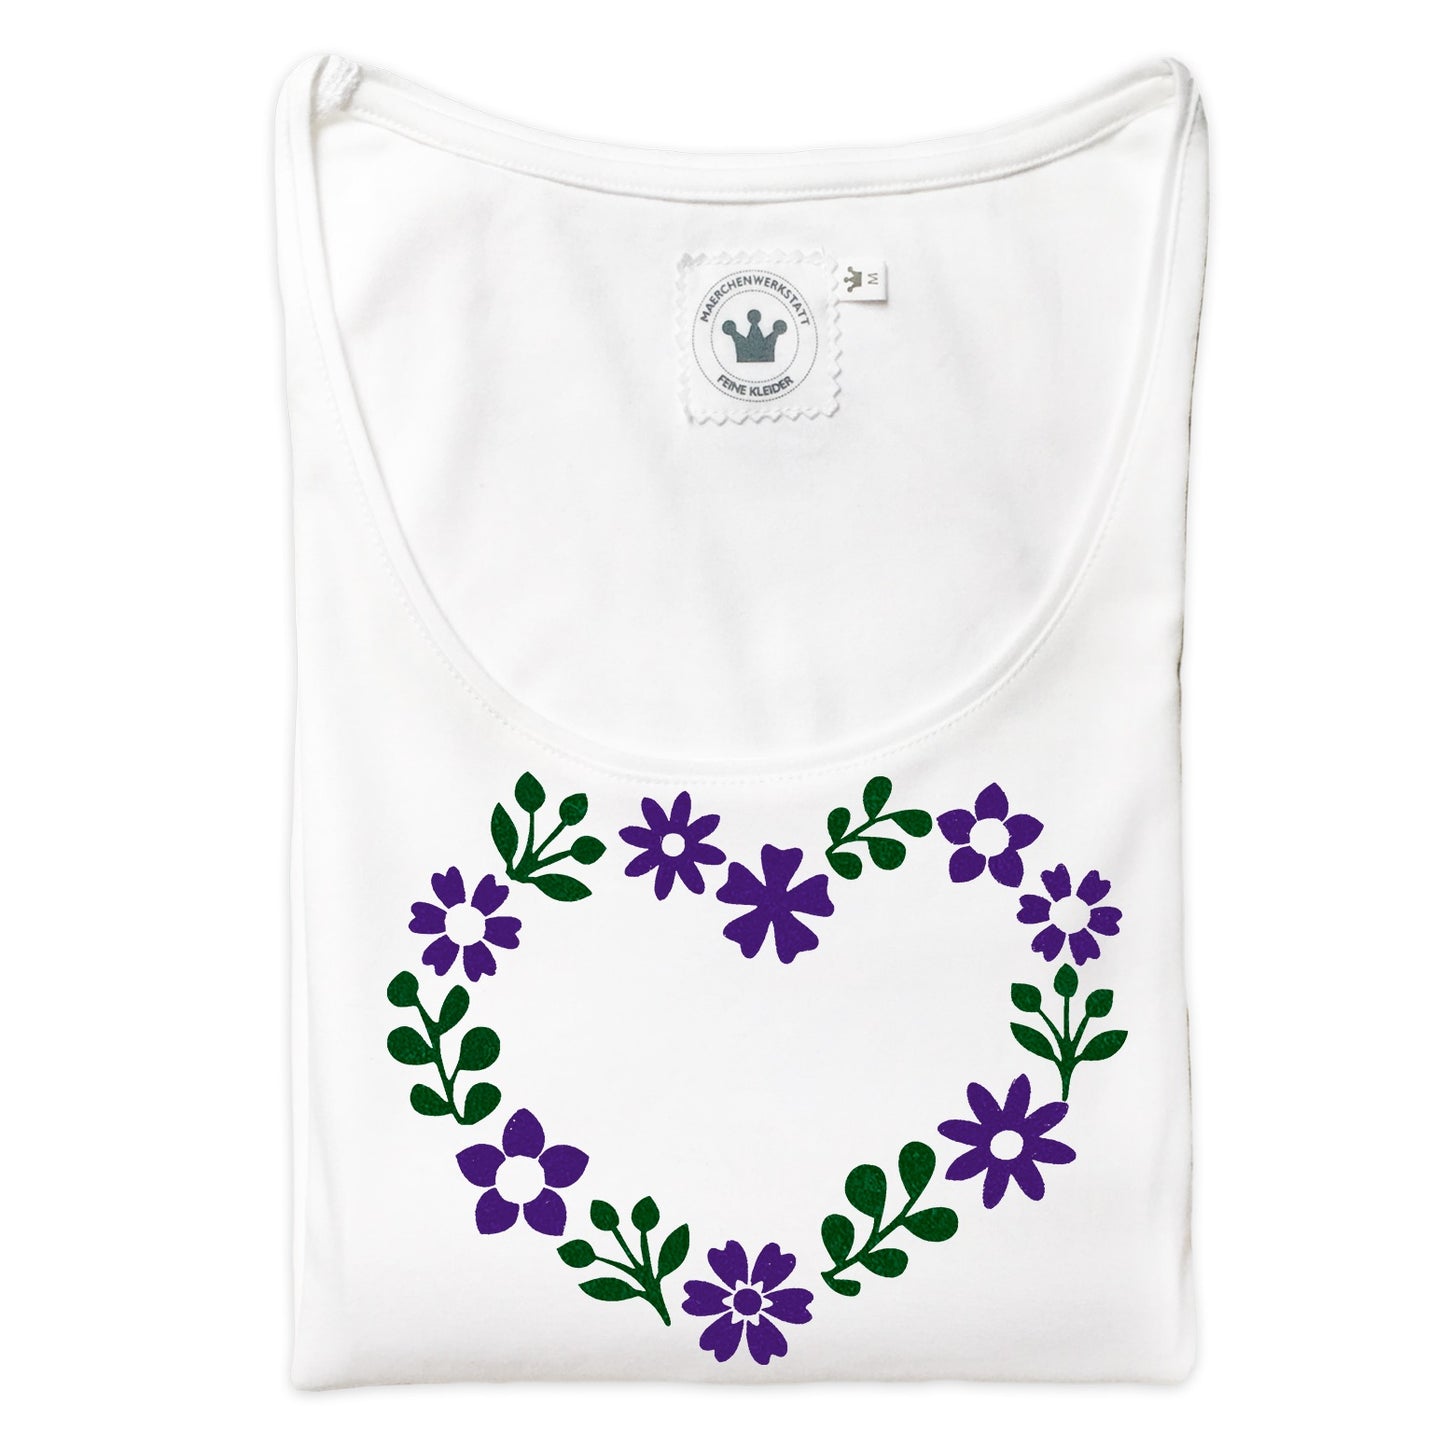 Damen T-Shirt romantisches Blumenherz